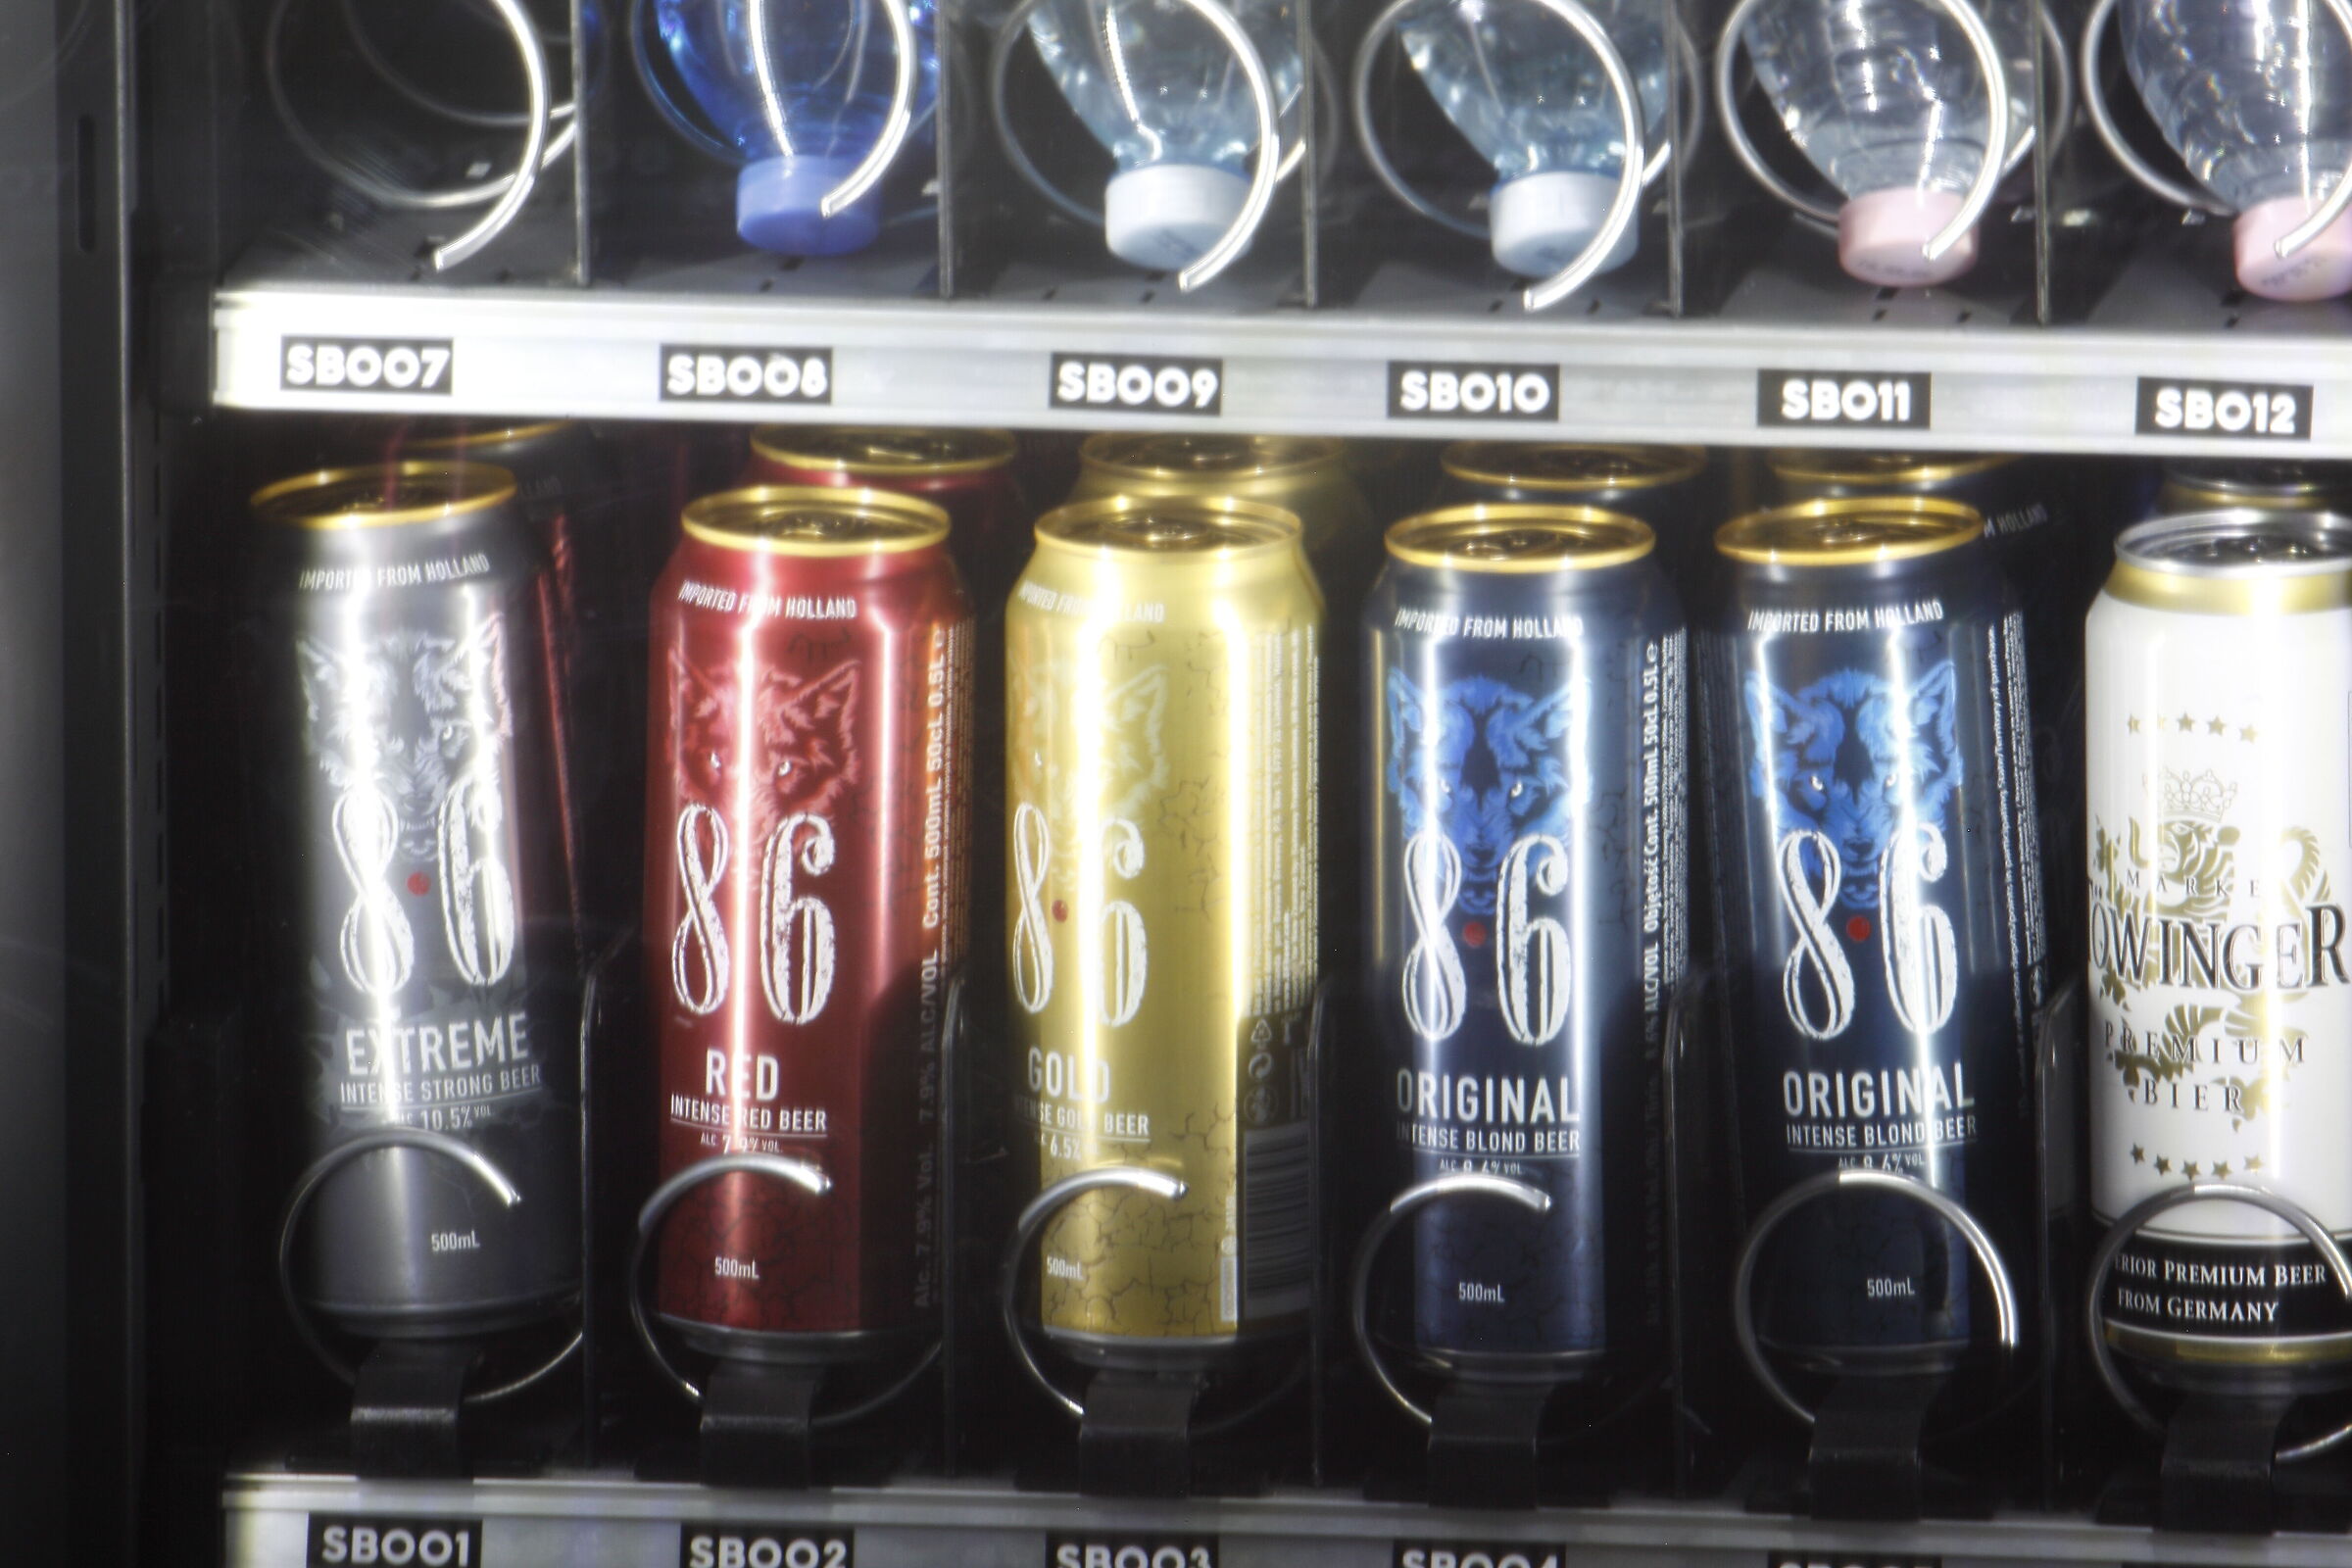 vending machine beers...